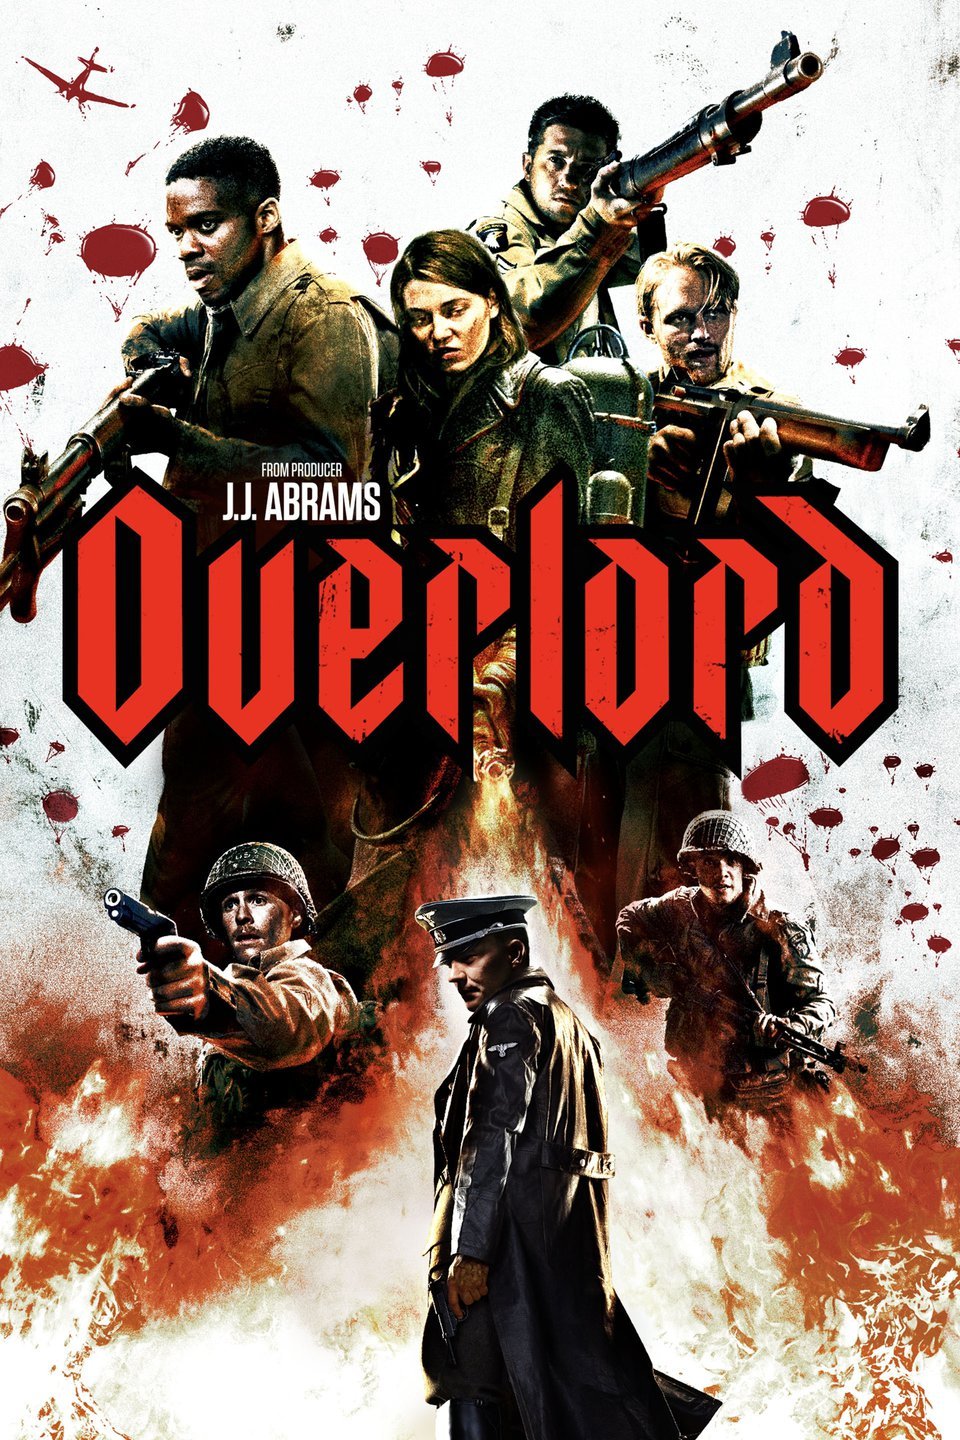 [MINI Super-HQ] Overlord (2018) ปฏิบัติการโอเวอร์ลอร์ด [1080p] [พากย์ไทย 5.1 + เสียงอังกฤษ DTS] [บรรยายไทย + อังกฤษ] [เสียงไทย + ซับไทย] [ONE2UP]